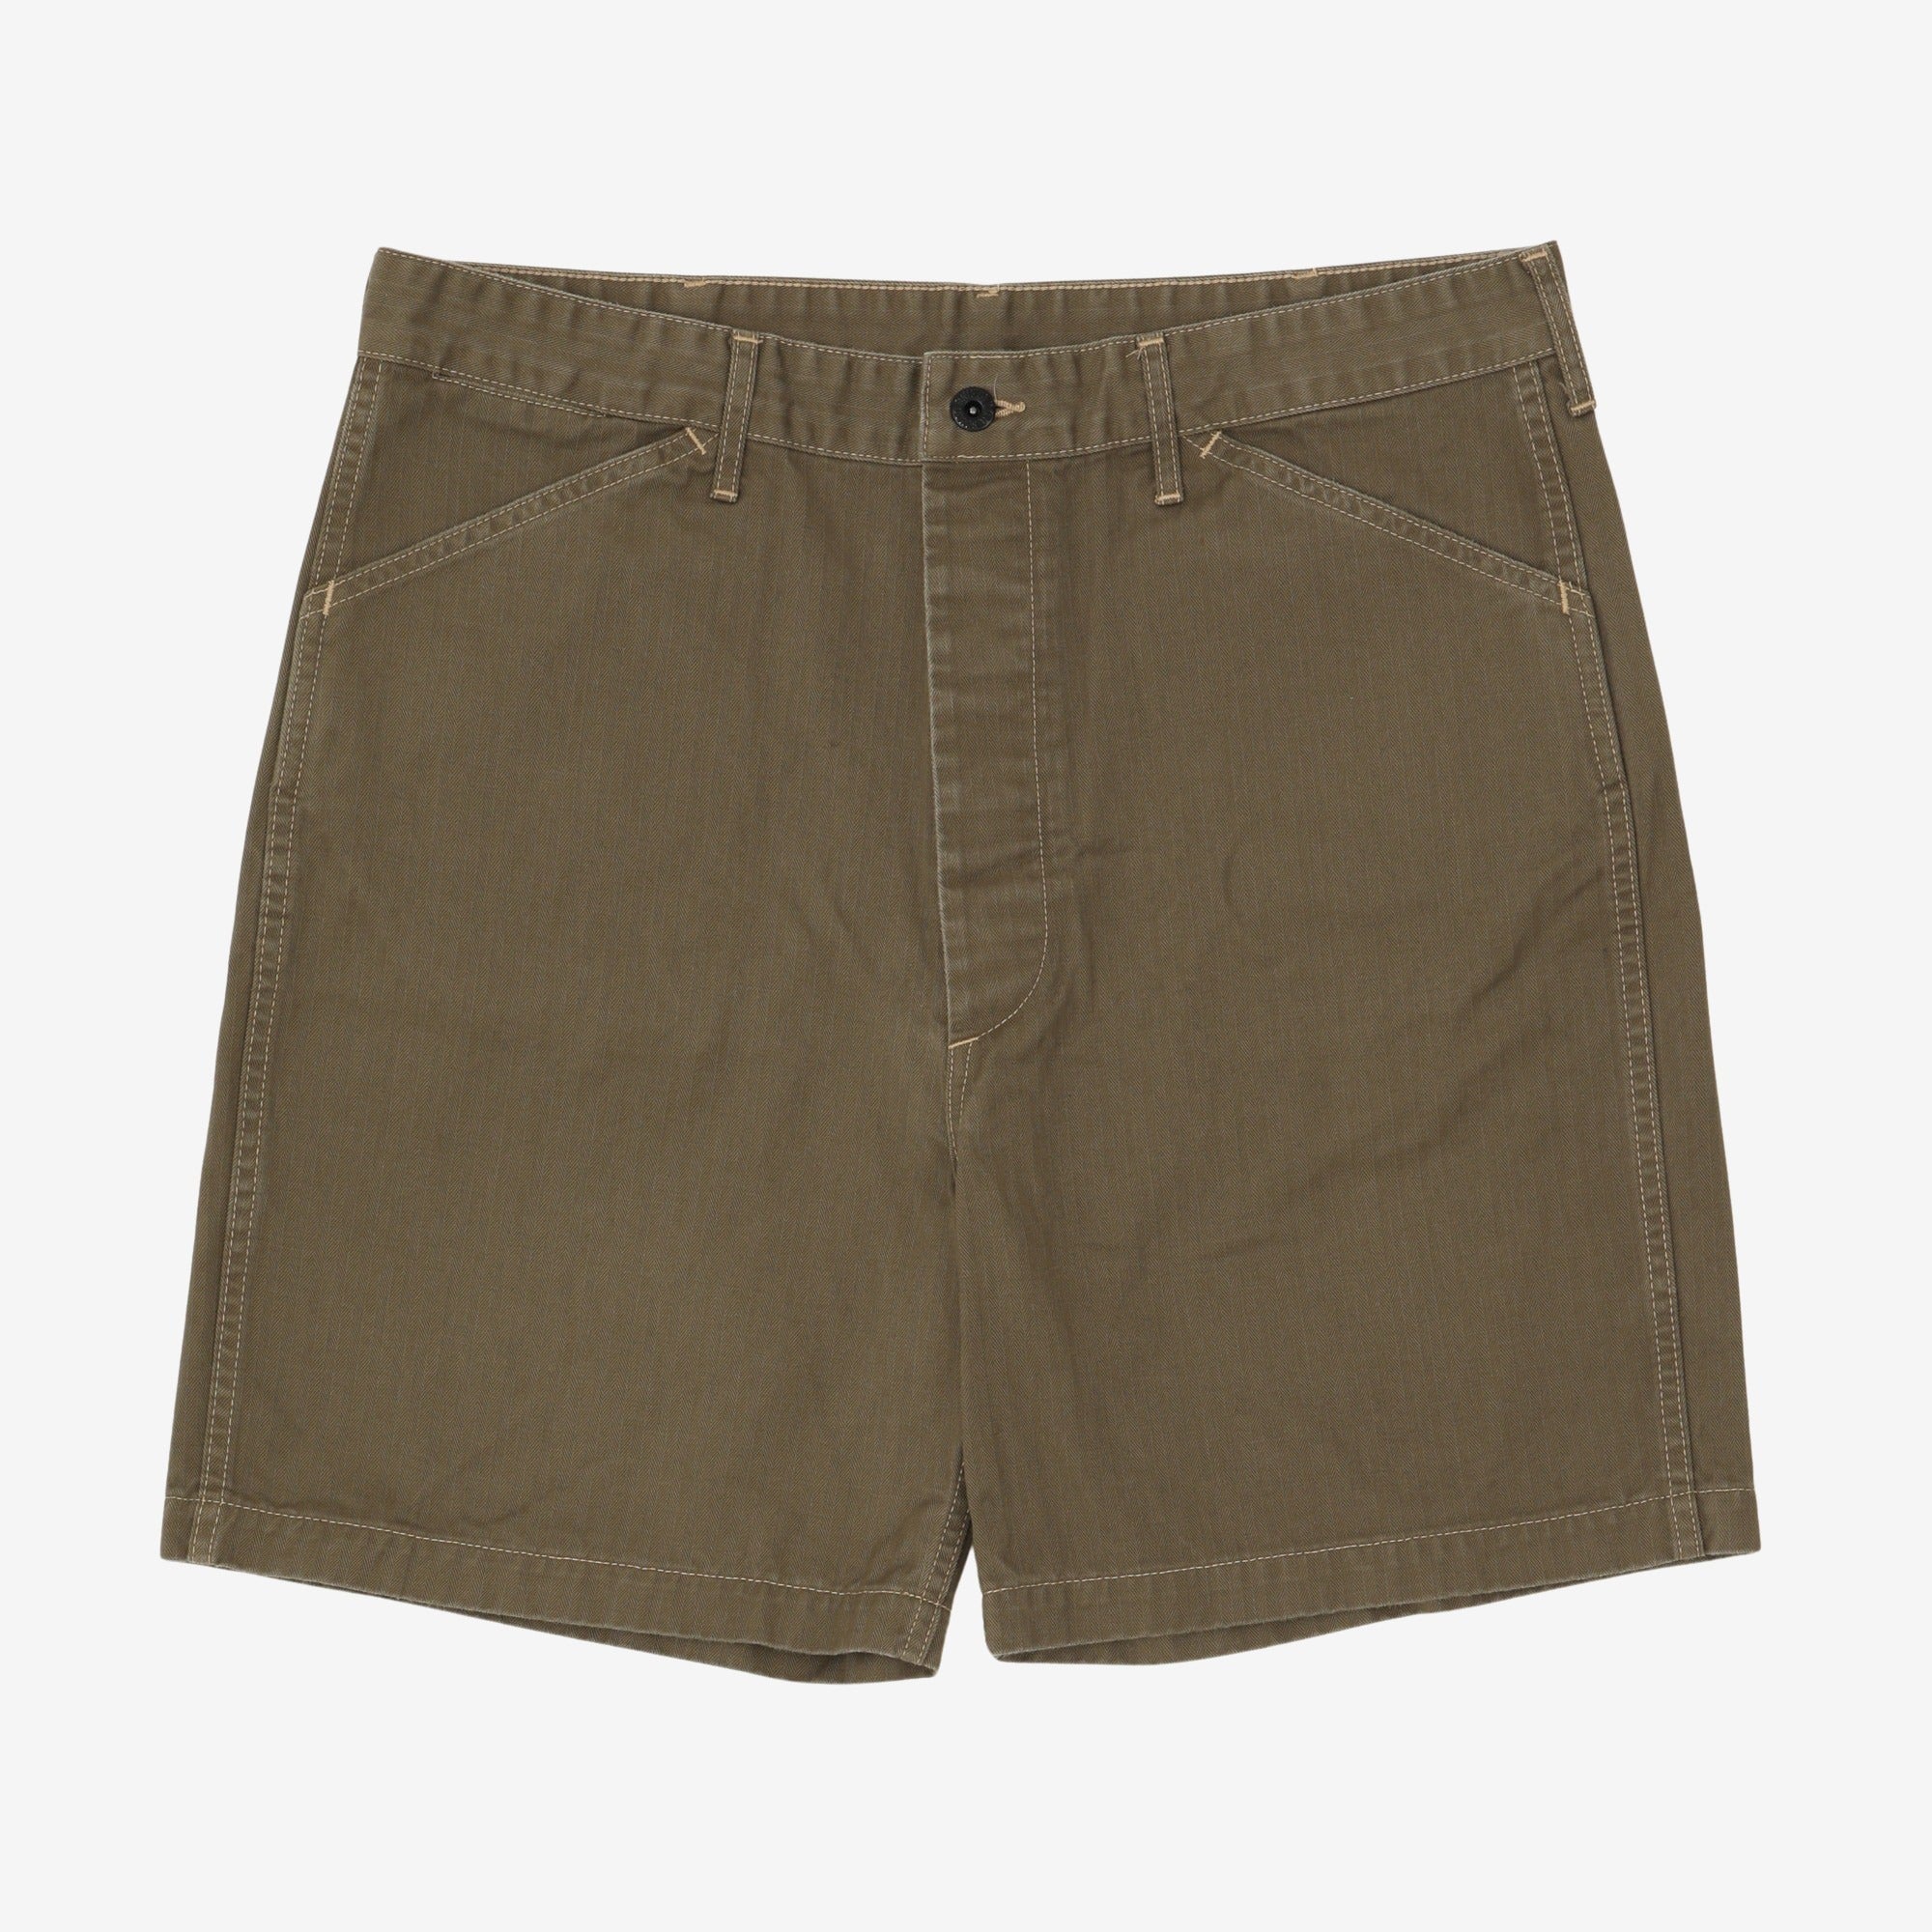 USMC Shorts